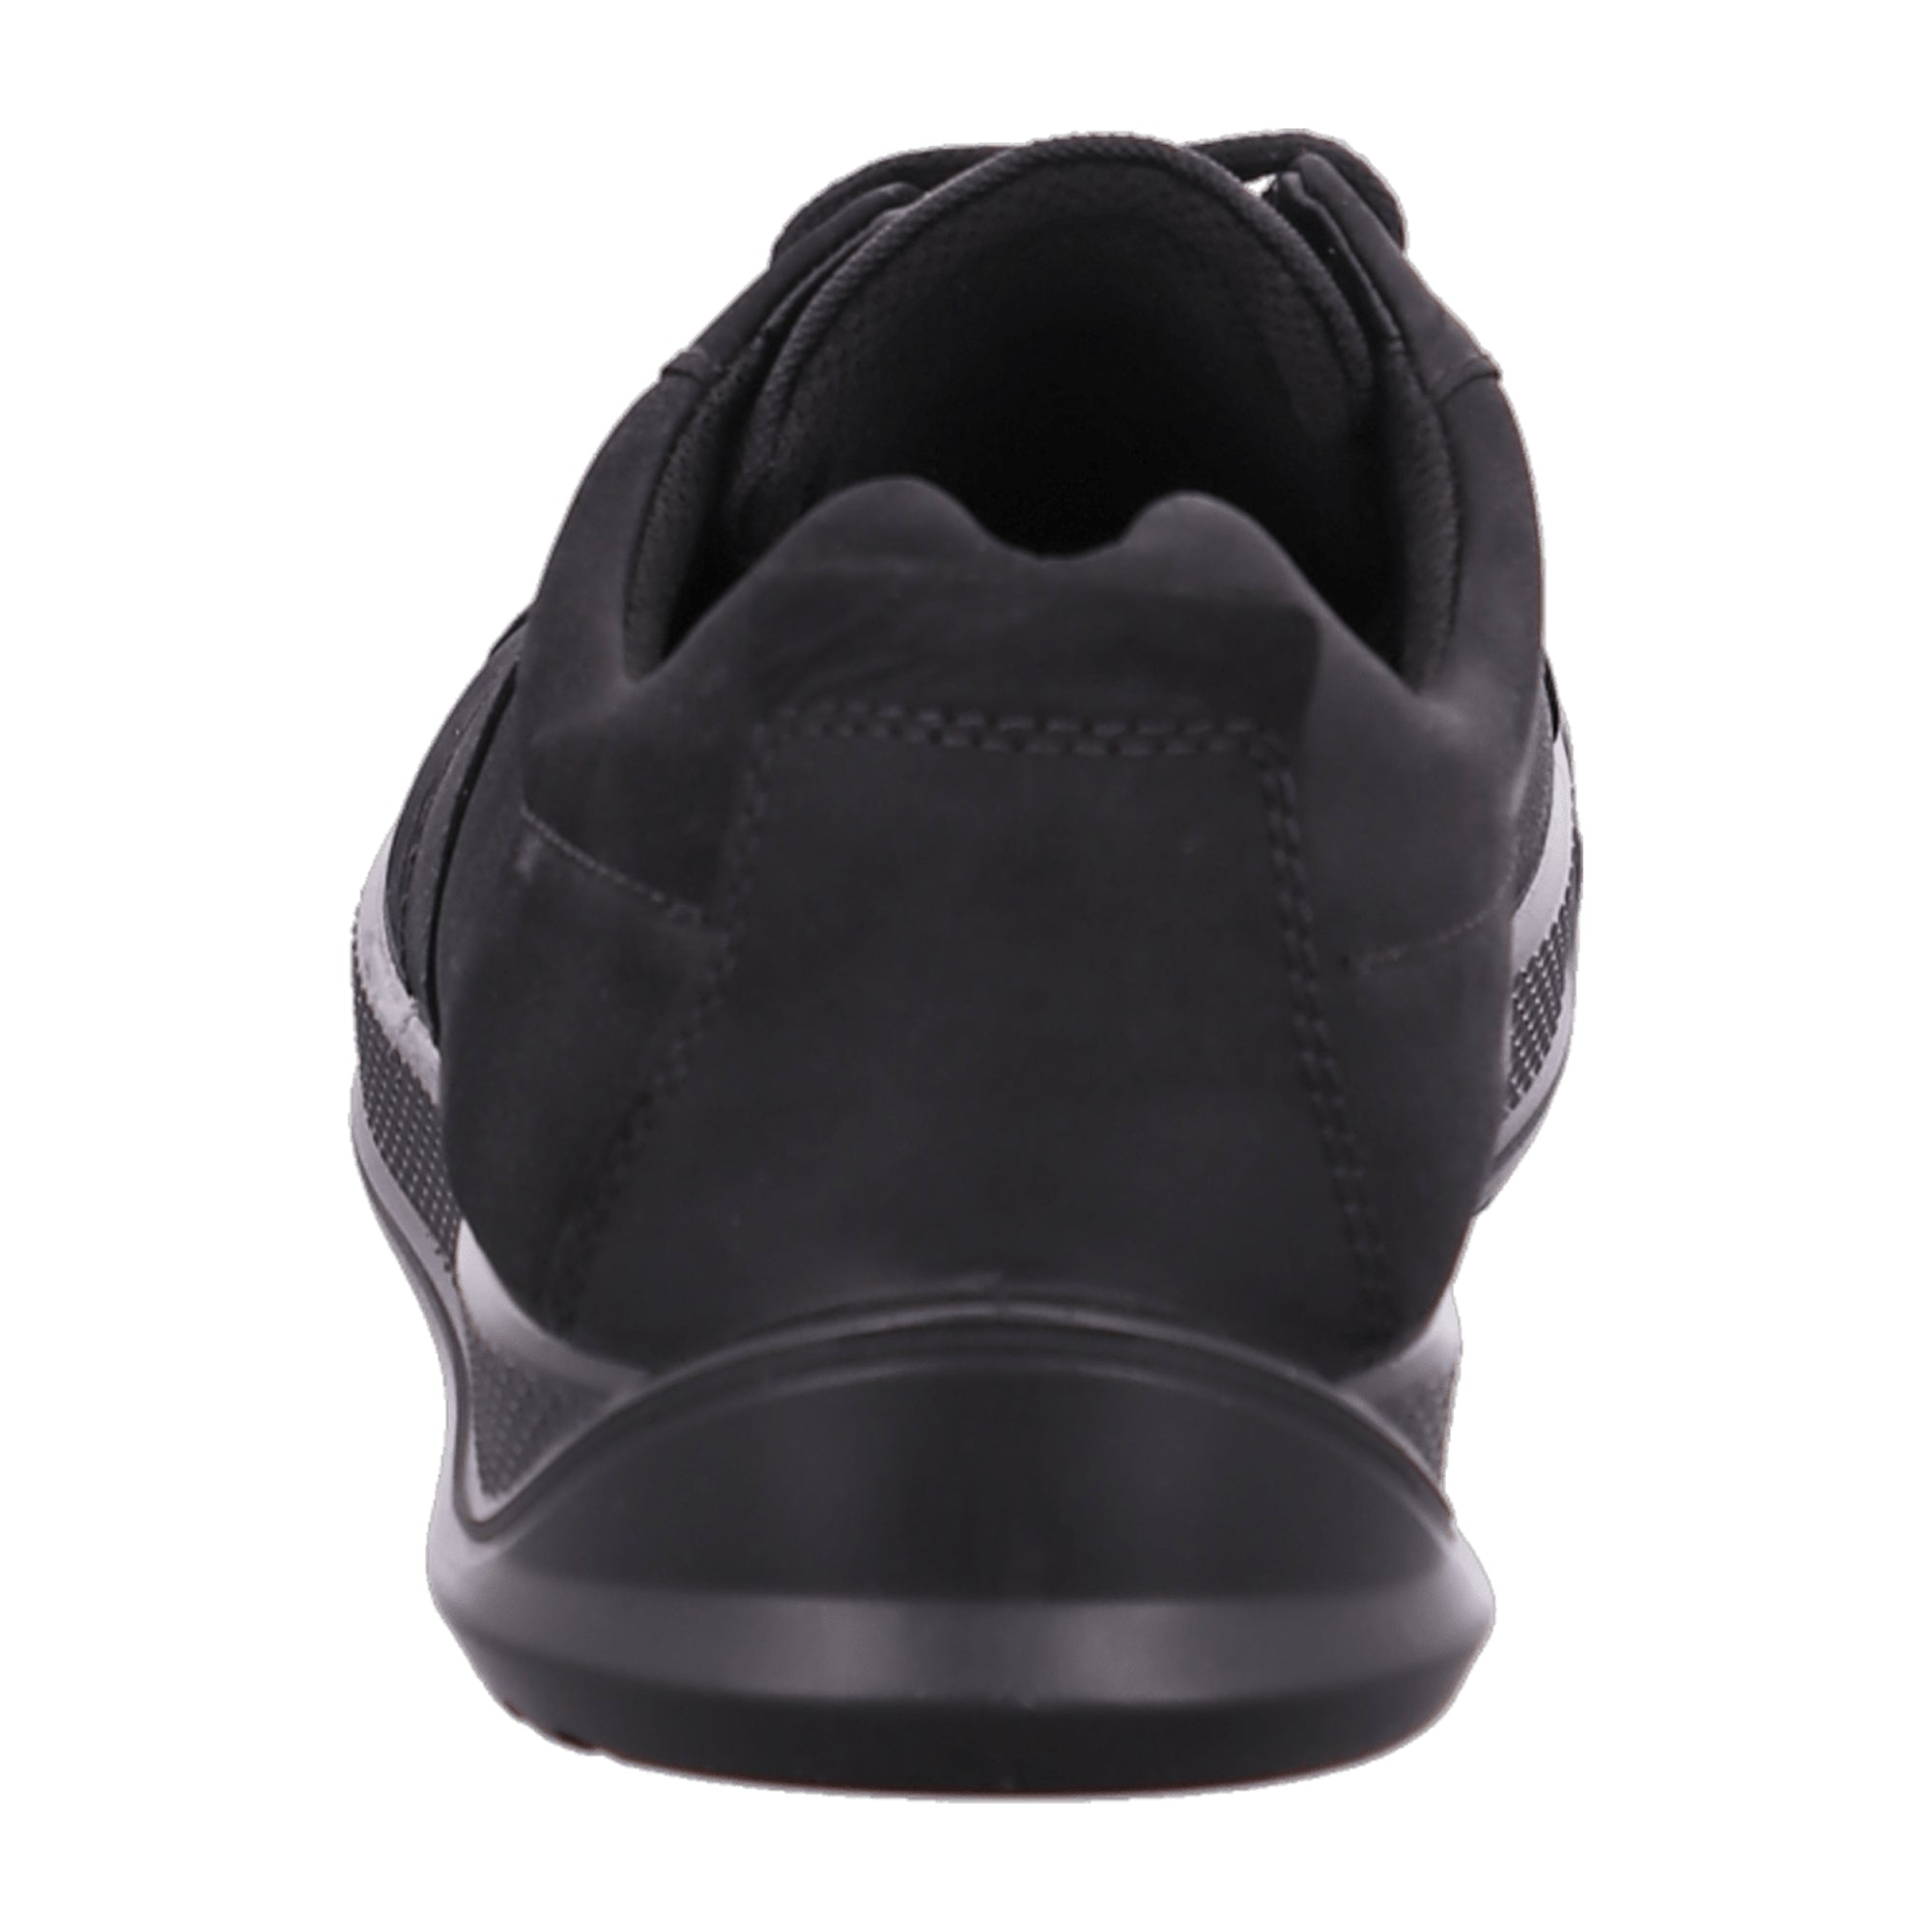 Ecco Men's Black Leather Shoes - Durable & Stylish